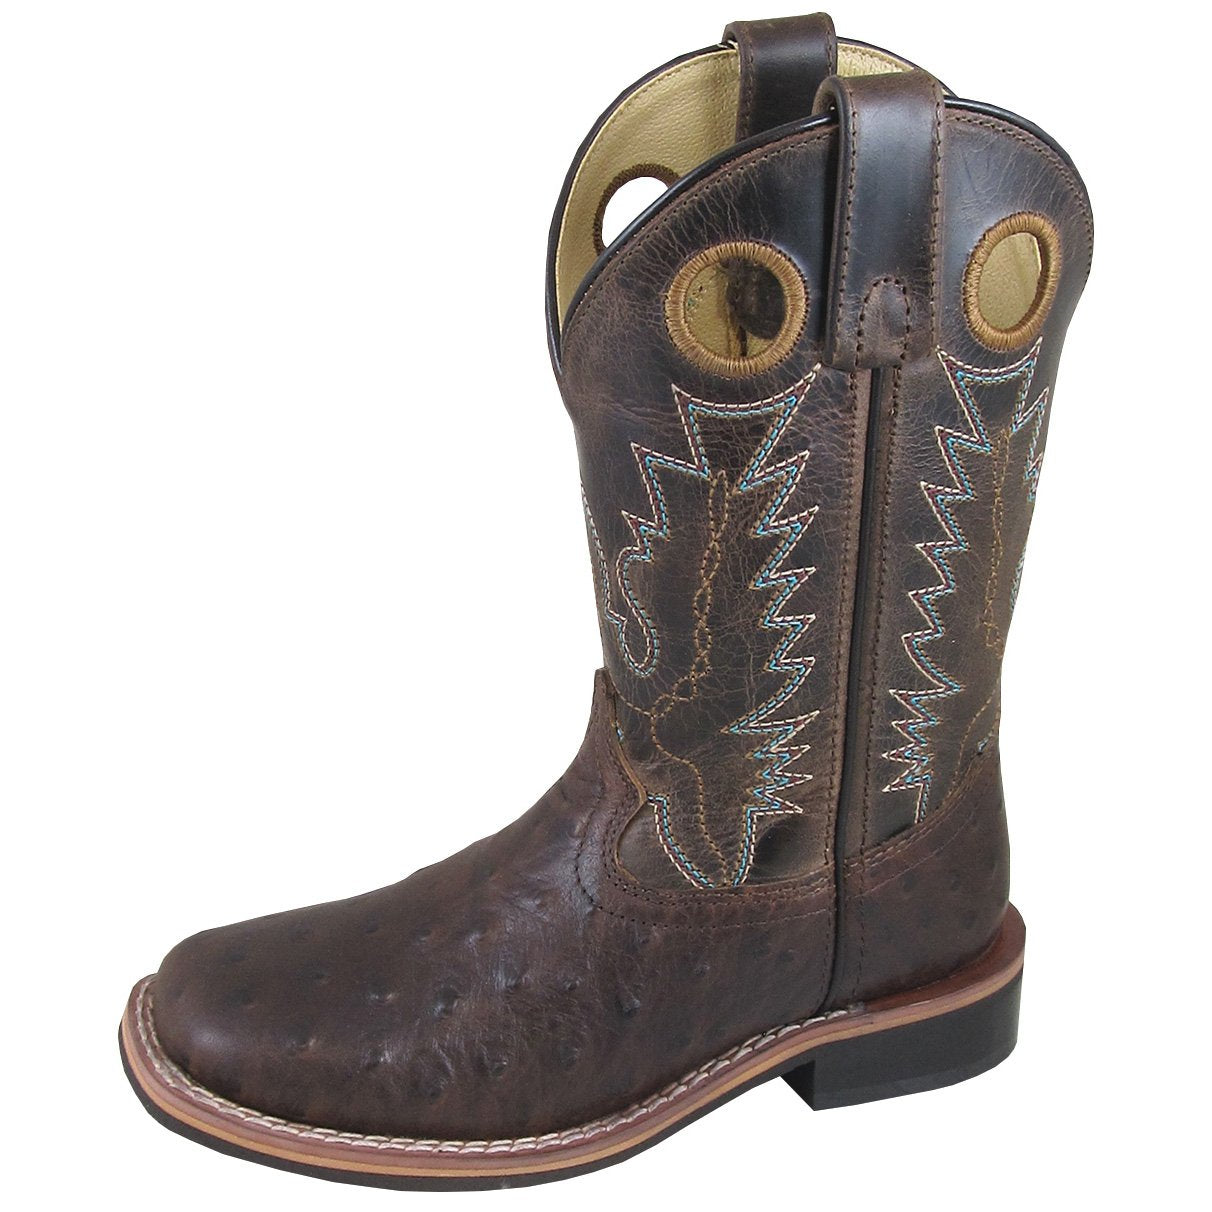 Smoky Mountain Children's Cheyenne Tobacco/Brown Crackle Cowboy Boot